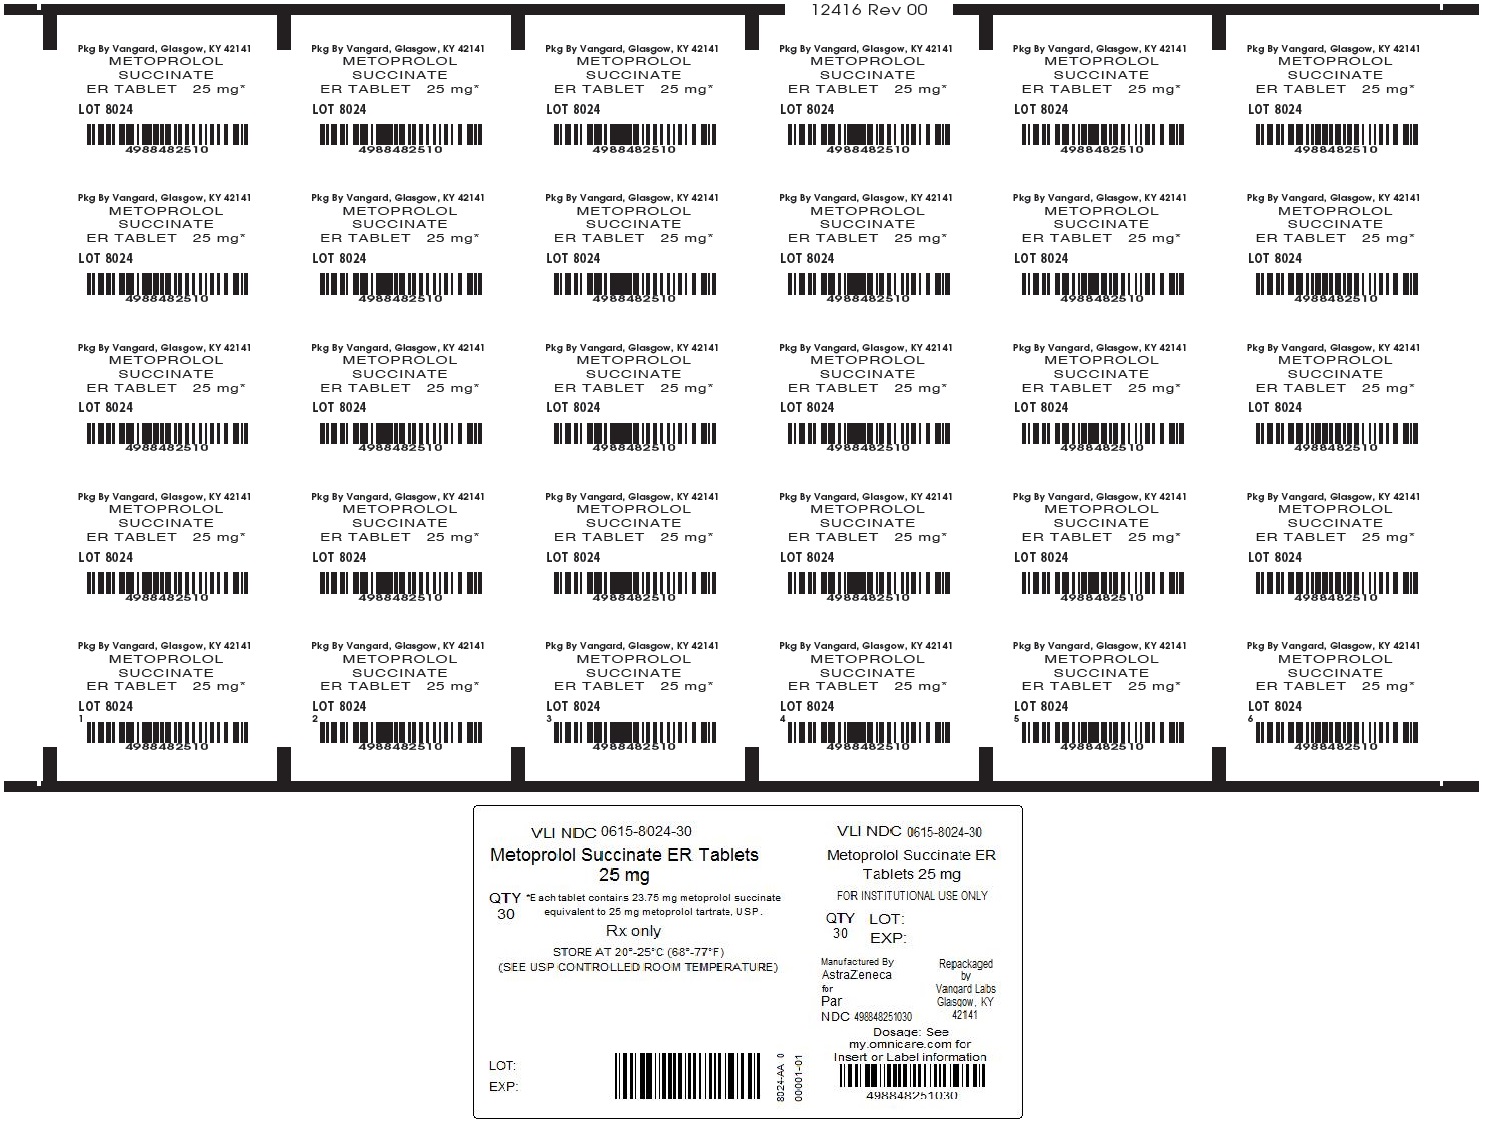 Metoprolol Succinate ER Tablet 25mg unit dose label